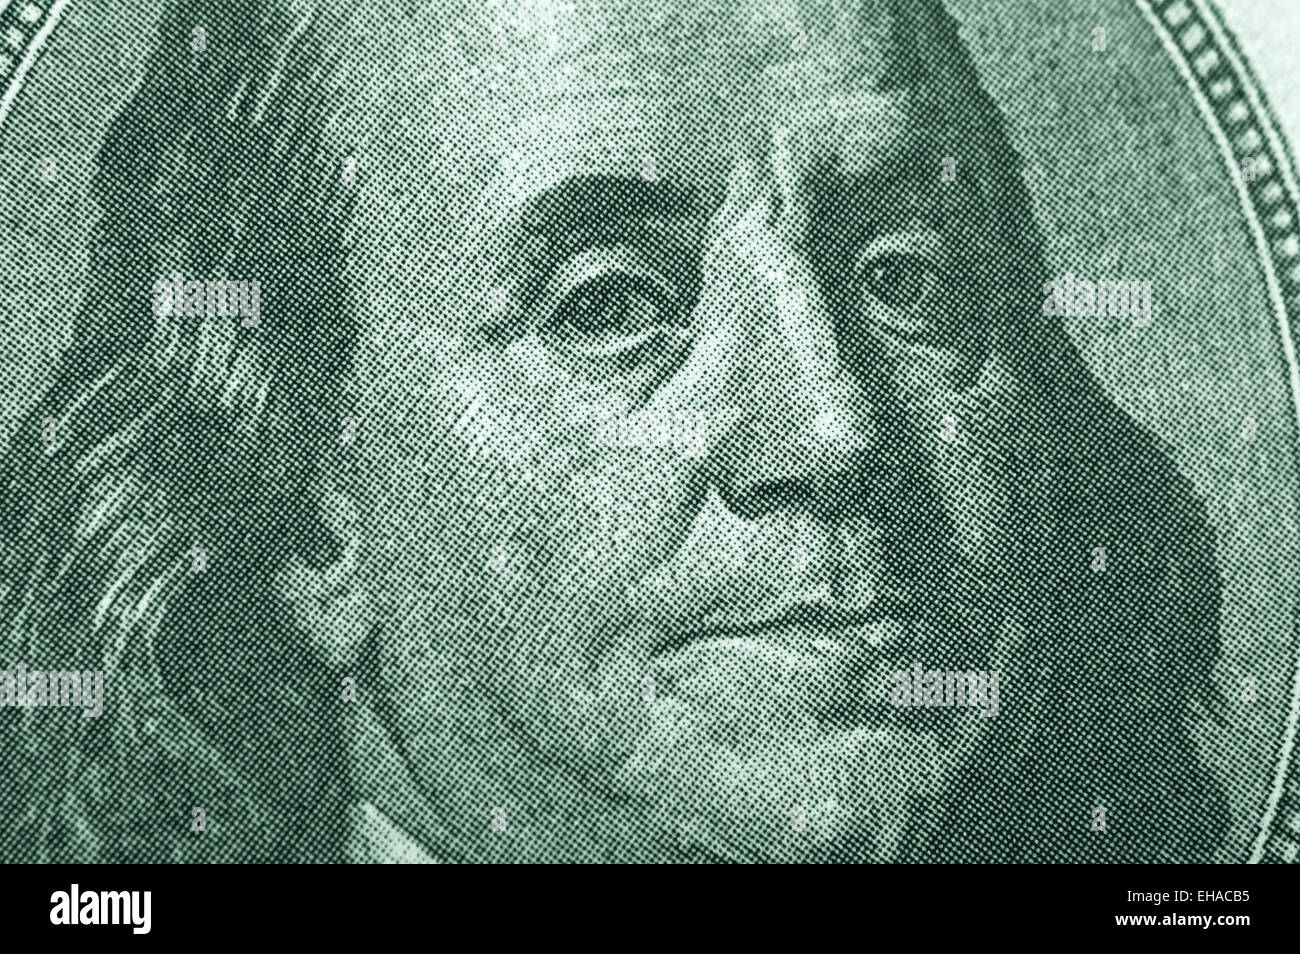 Benjamin Franklin From Dollar Bill, One Hundred Dollars, Close Up Stock Photo